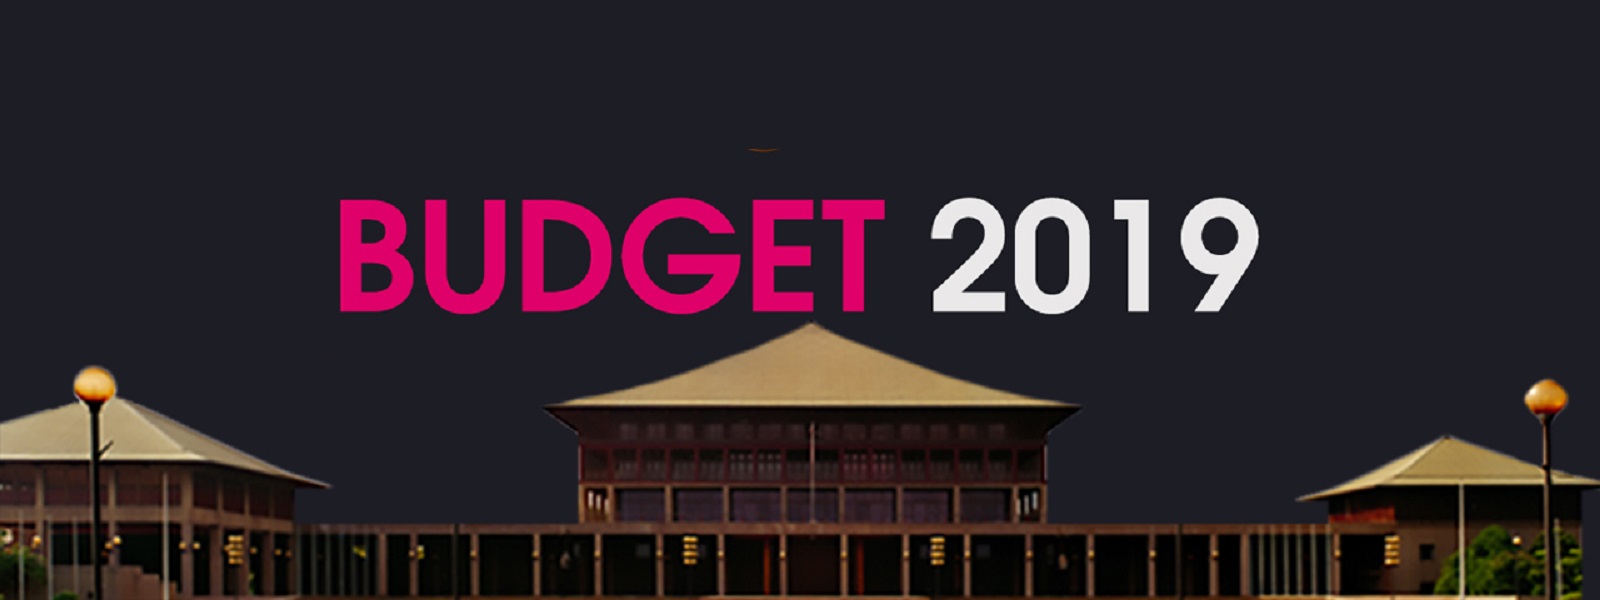 BUDGET 2019 - Ready for presentation